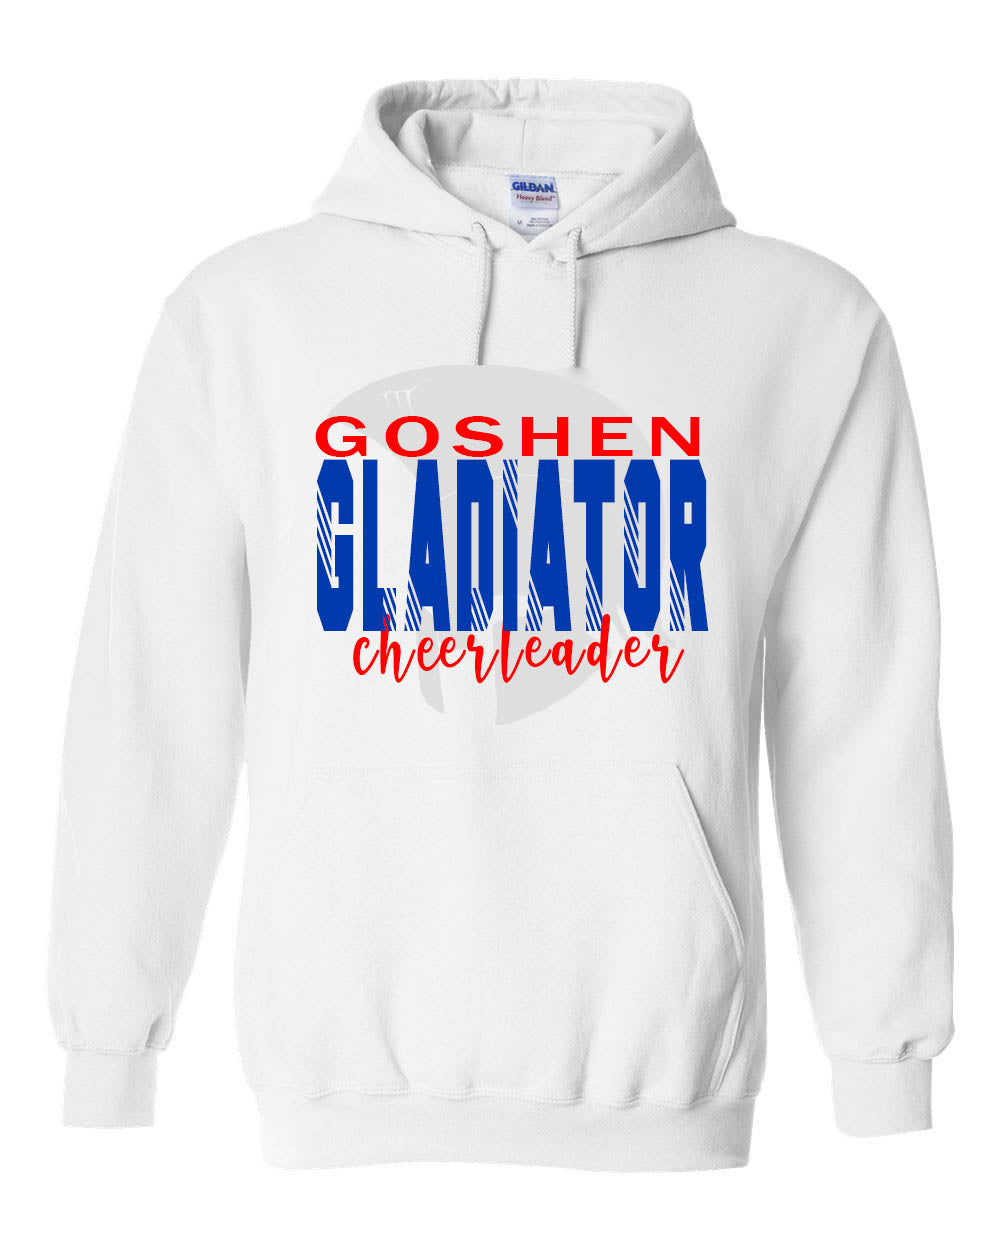 Goshen Gladiator Cheer Hooded Sweatshirt